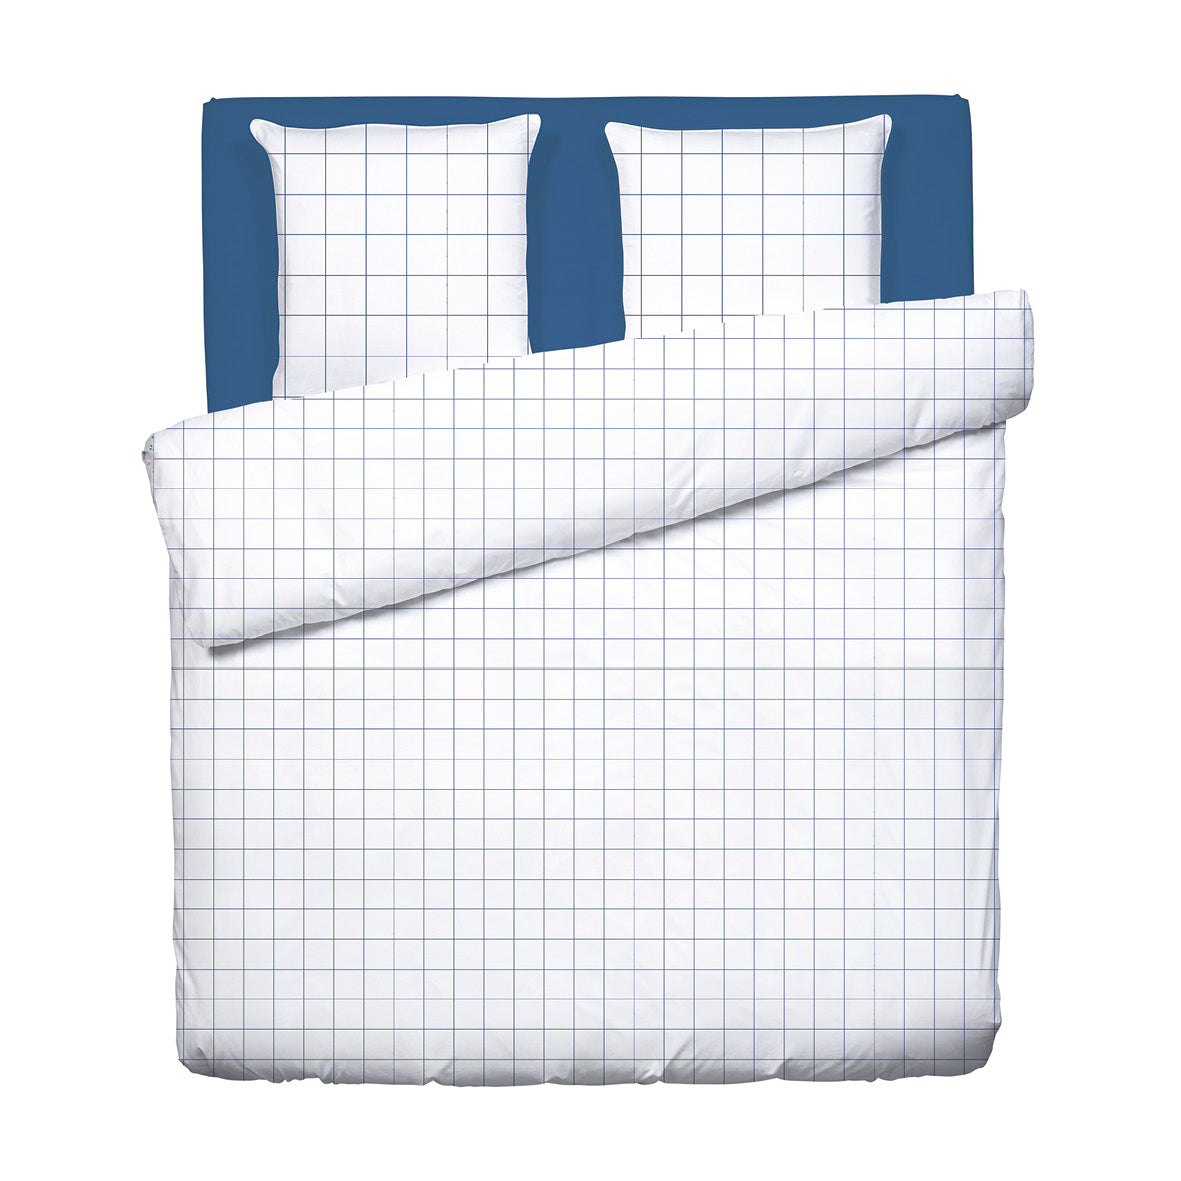 Duvet cover + pillowcase(s) cotton satin - Caren White